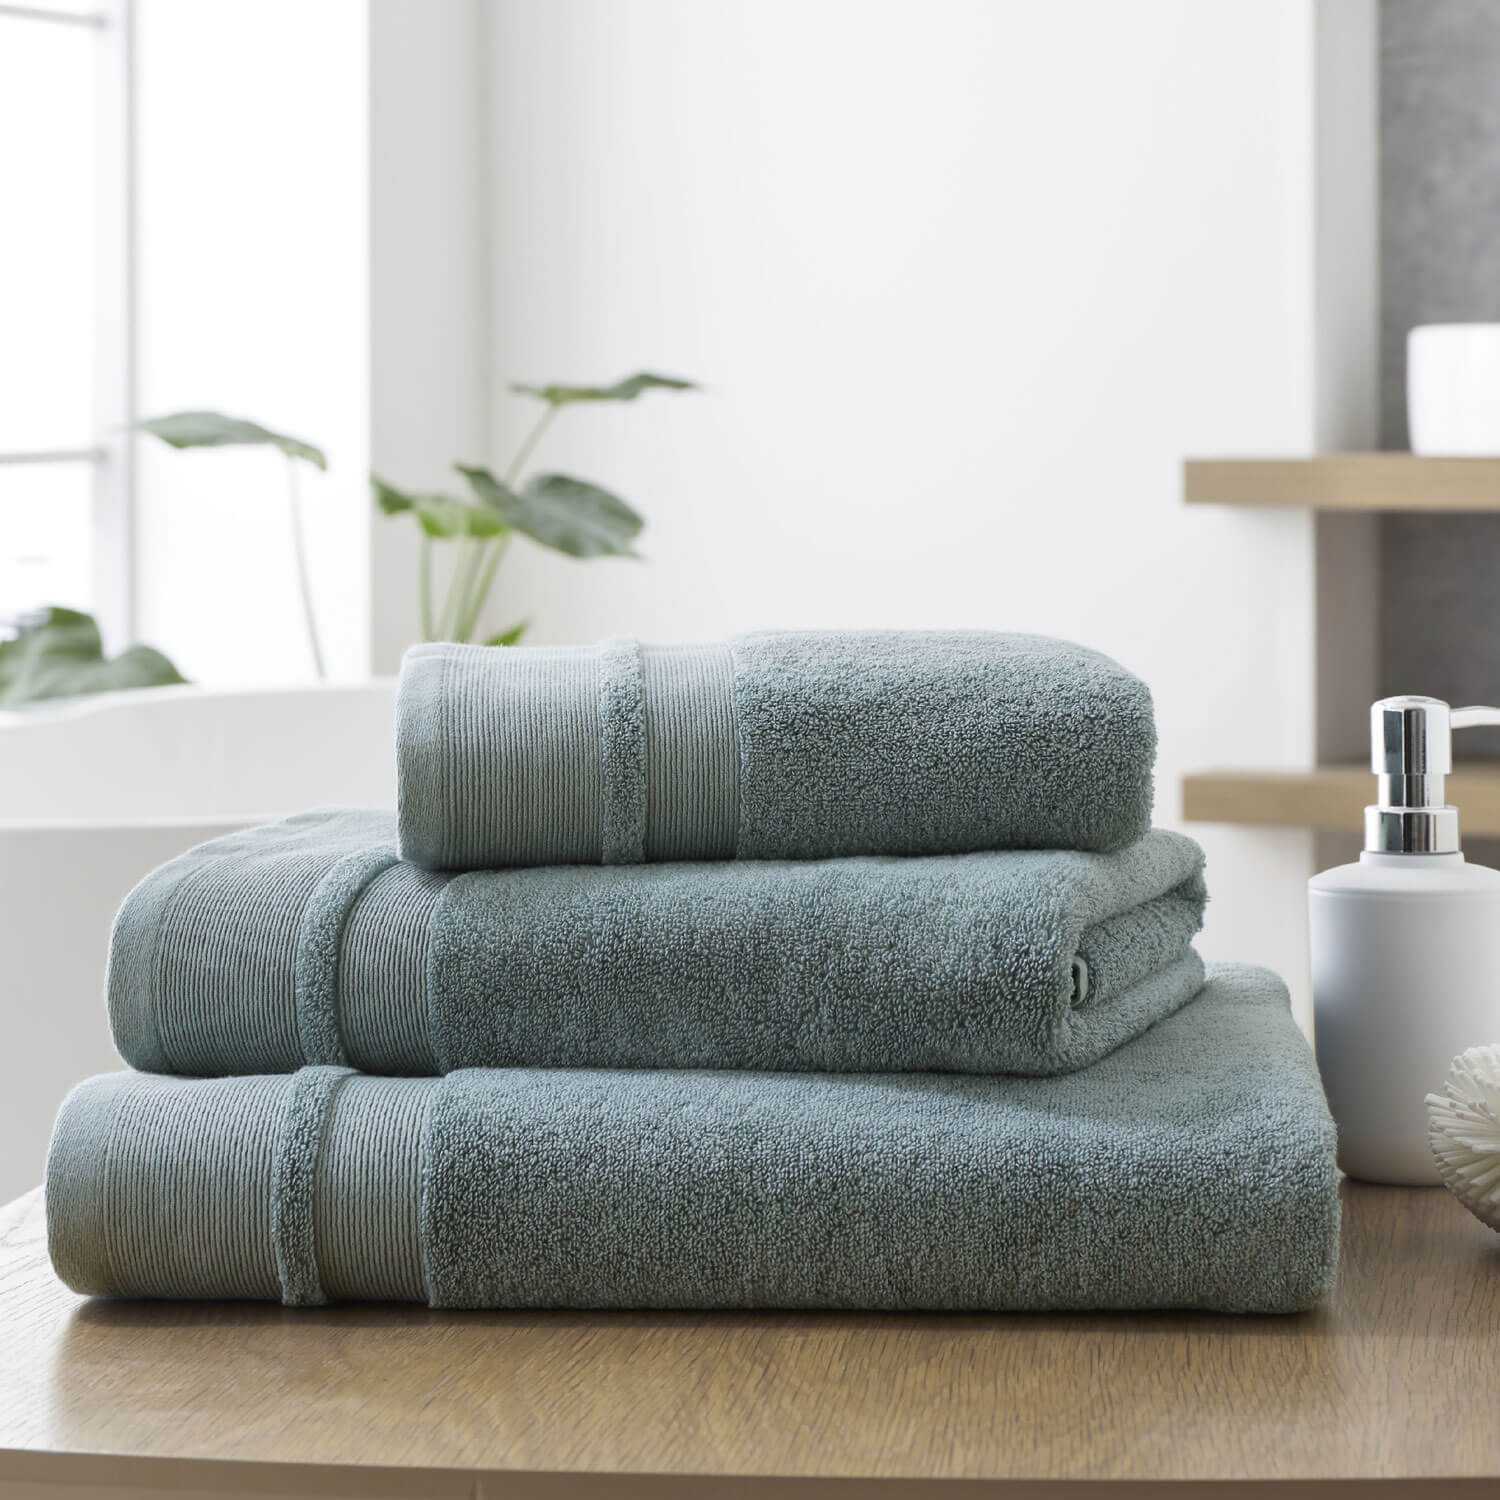 Dorma Zero Twist Cotton Modal Towel - Teal 1 Shaws Department Stores